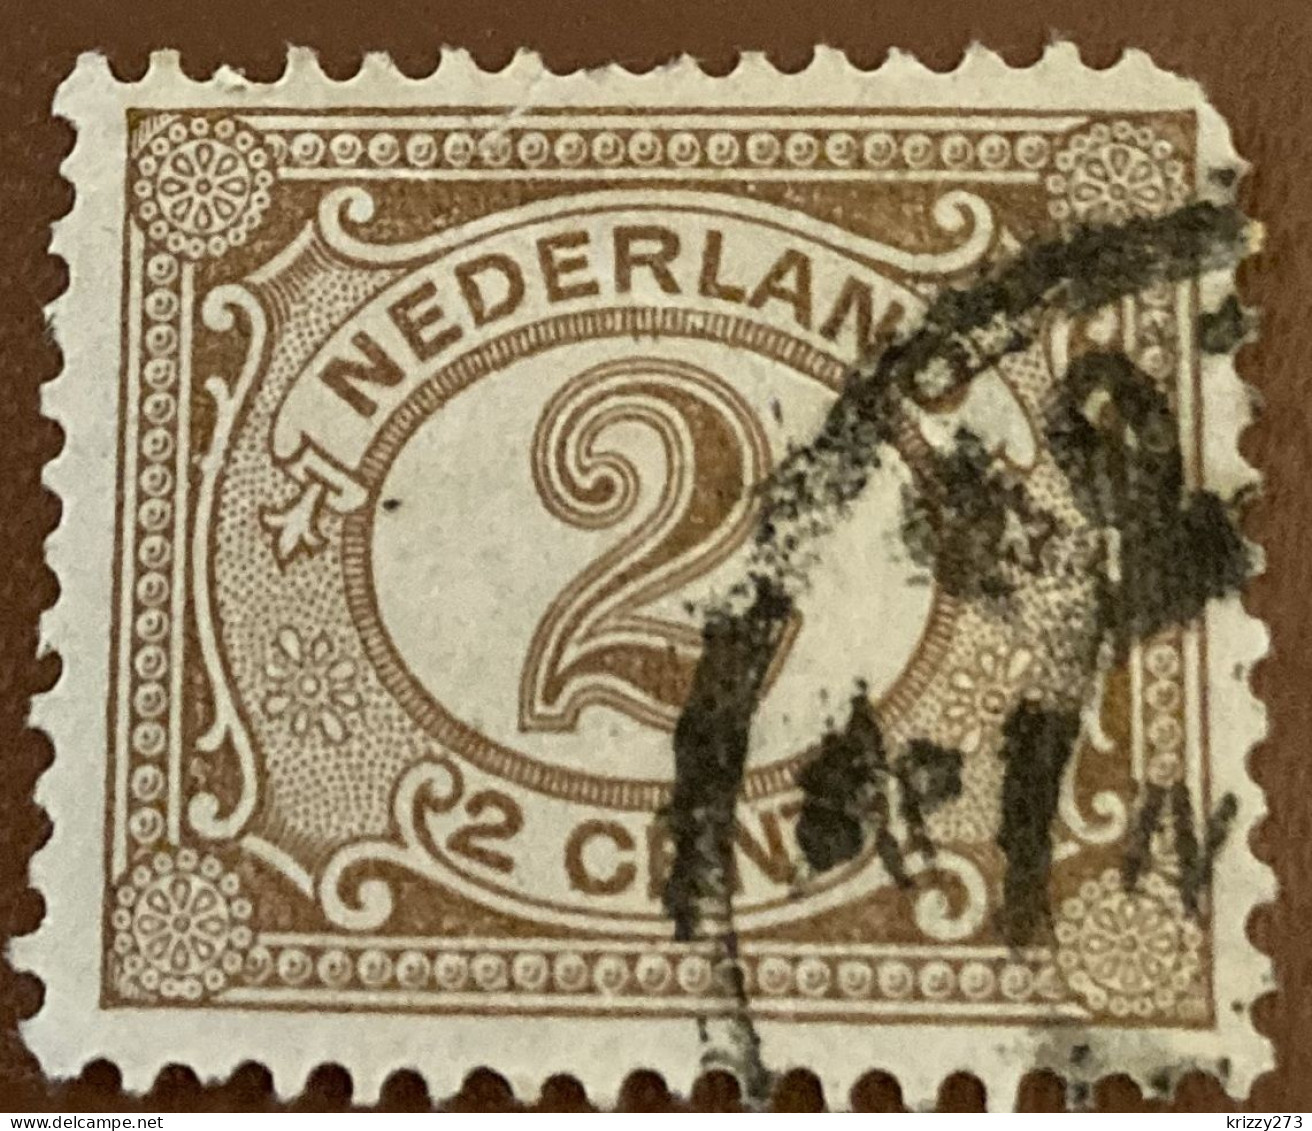 Netherlands 1899 New Daily Stamps 2 C - Used - Gebruikt